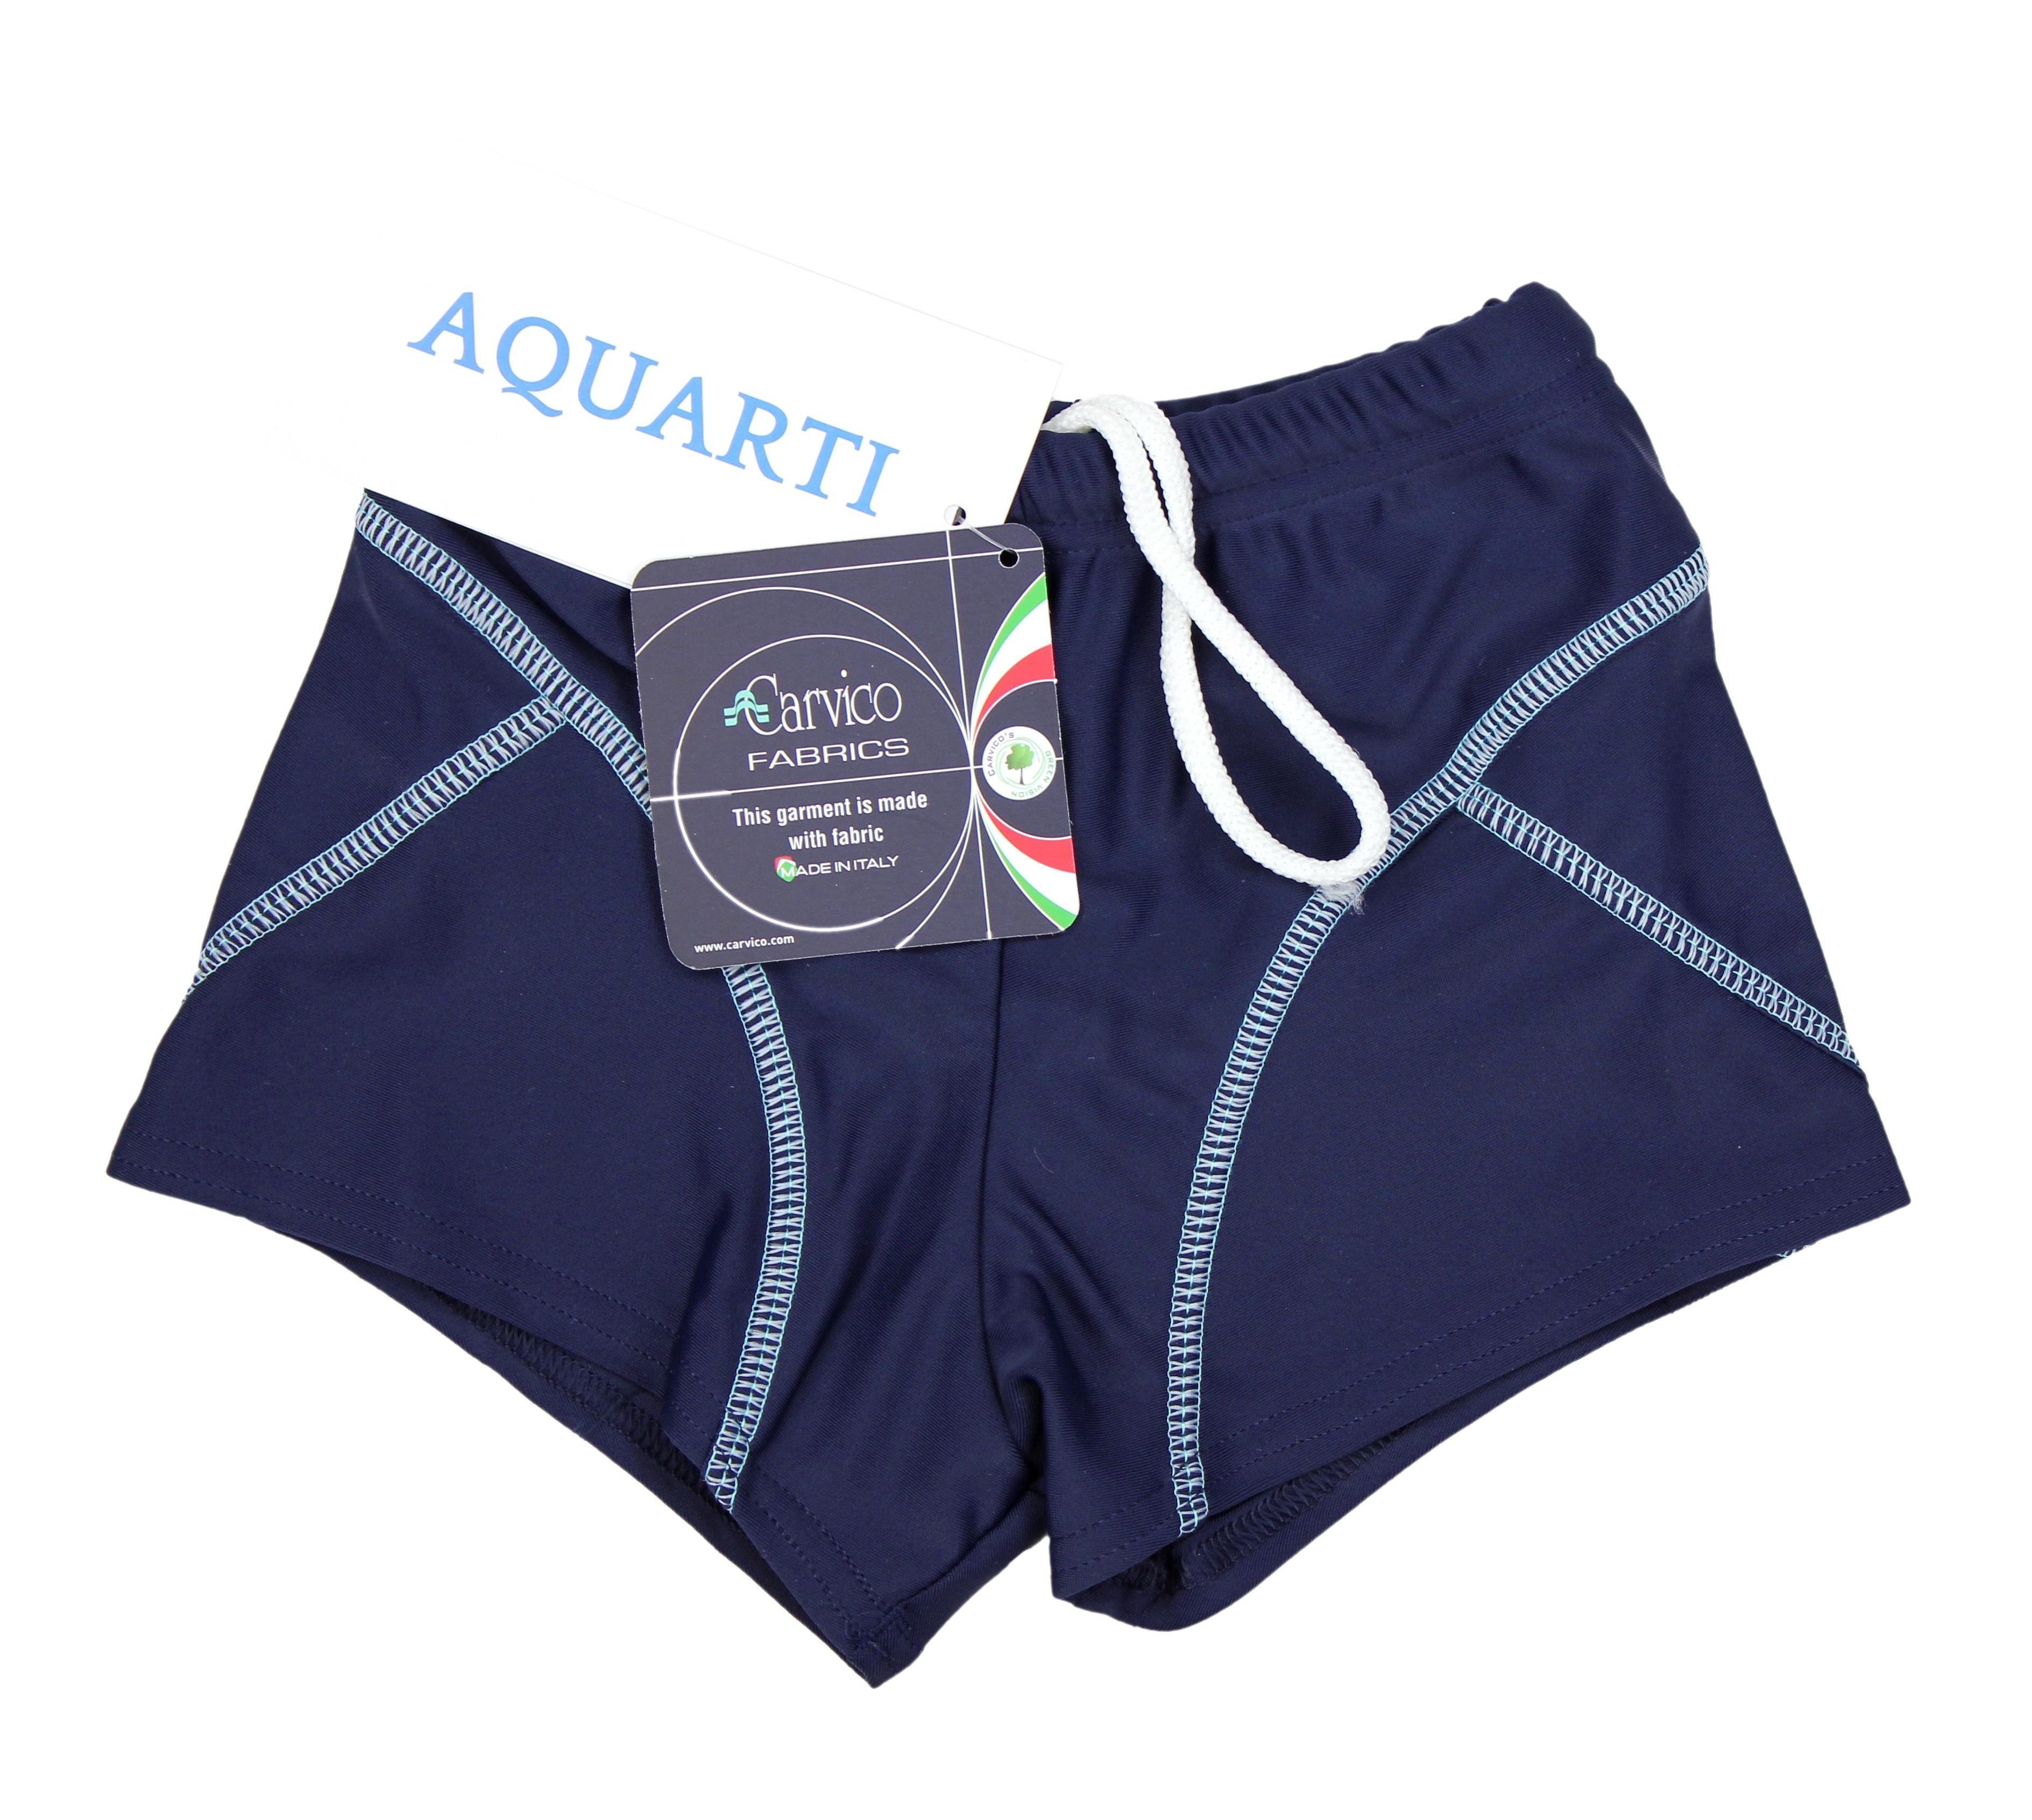 Aquarti Badehose Aquarti Jungen Badehose Nähte Blau Dunkelblau Schwimmhose / kontrastfarbene